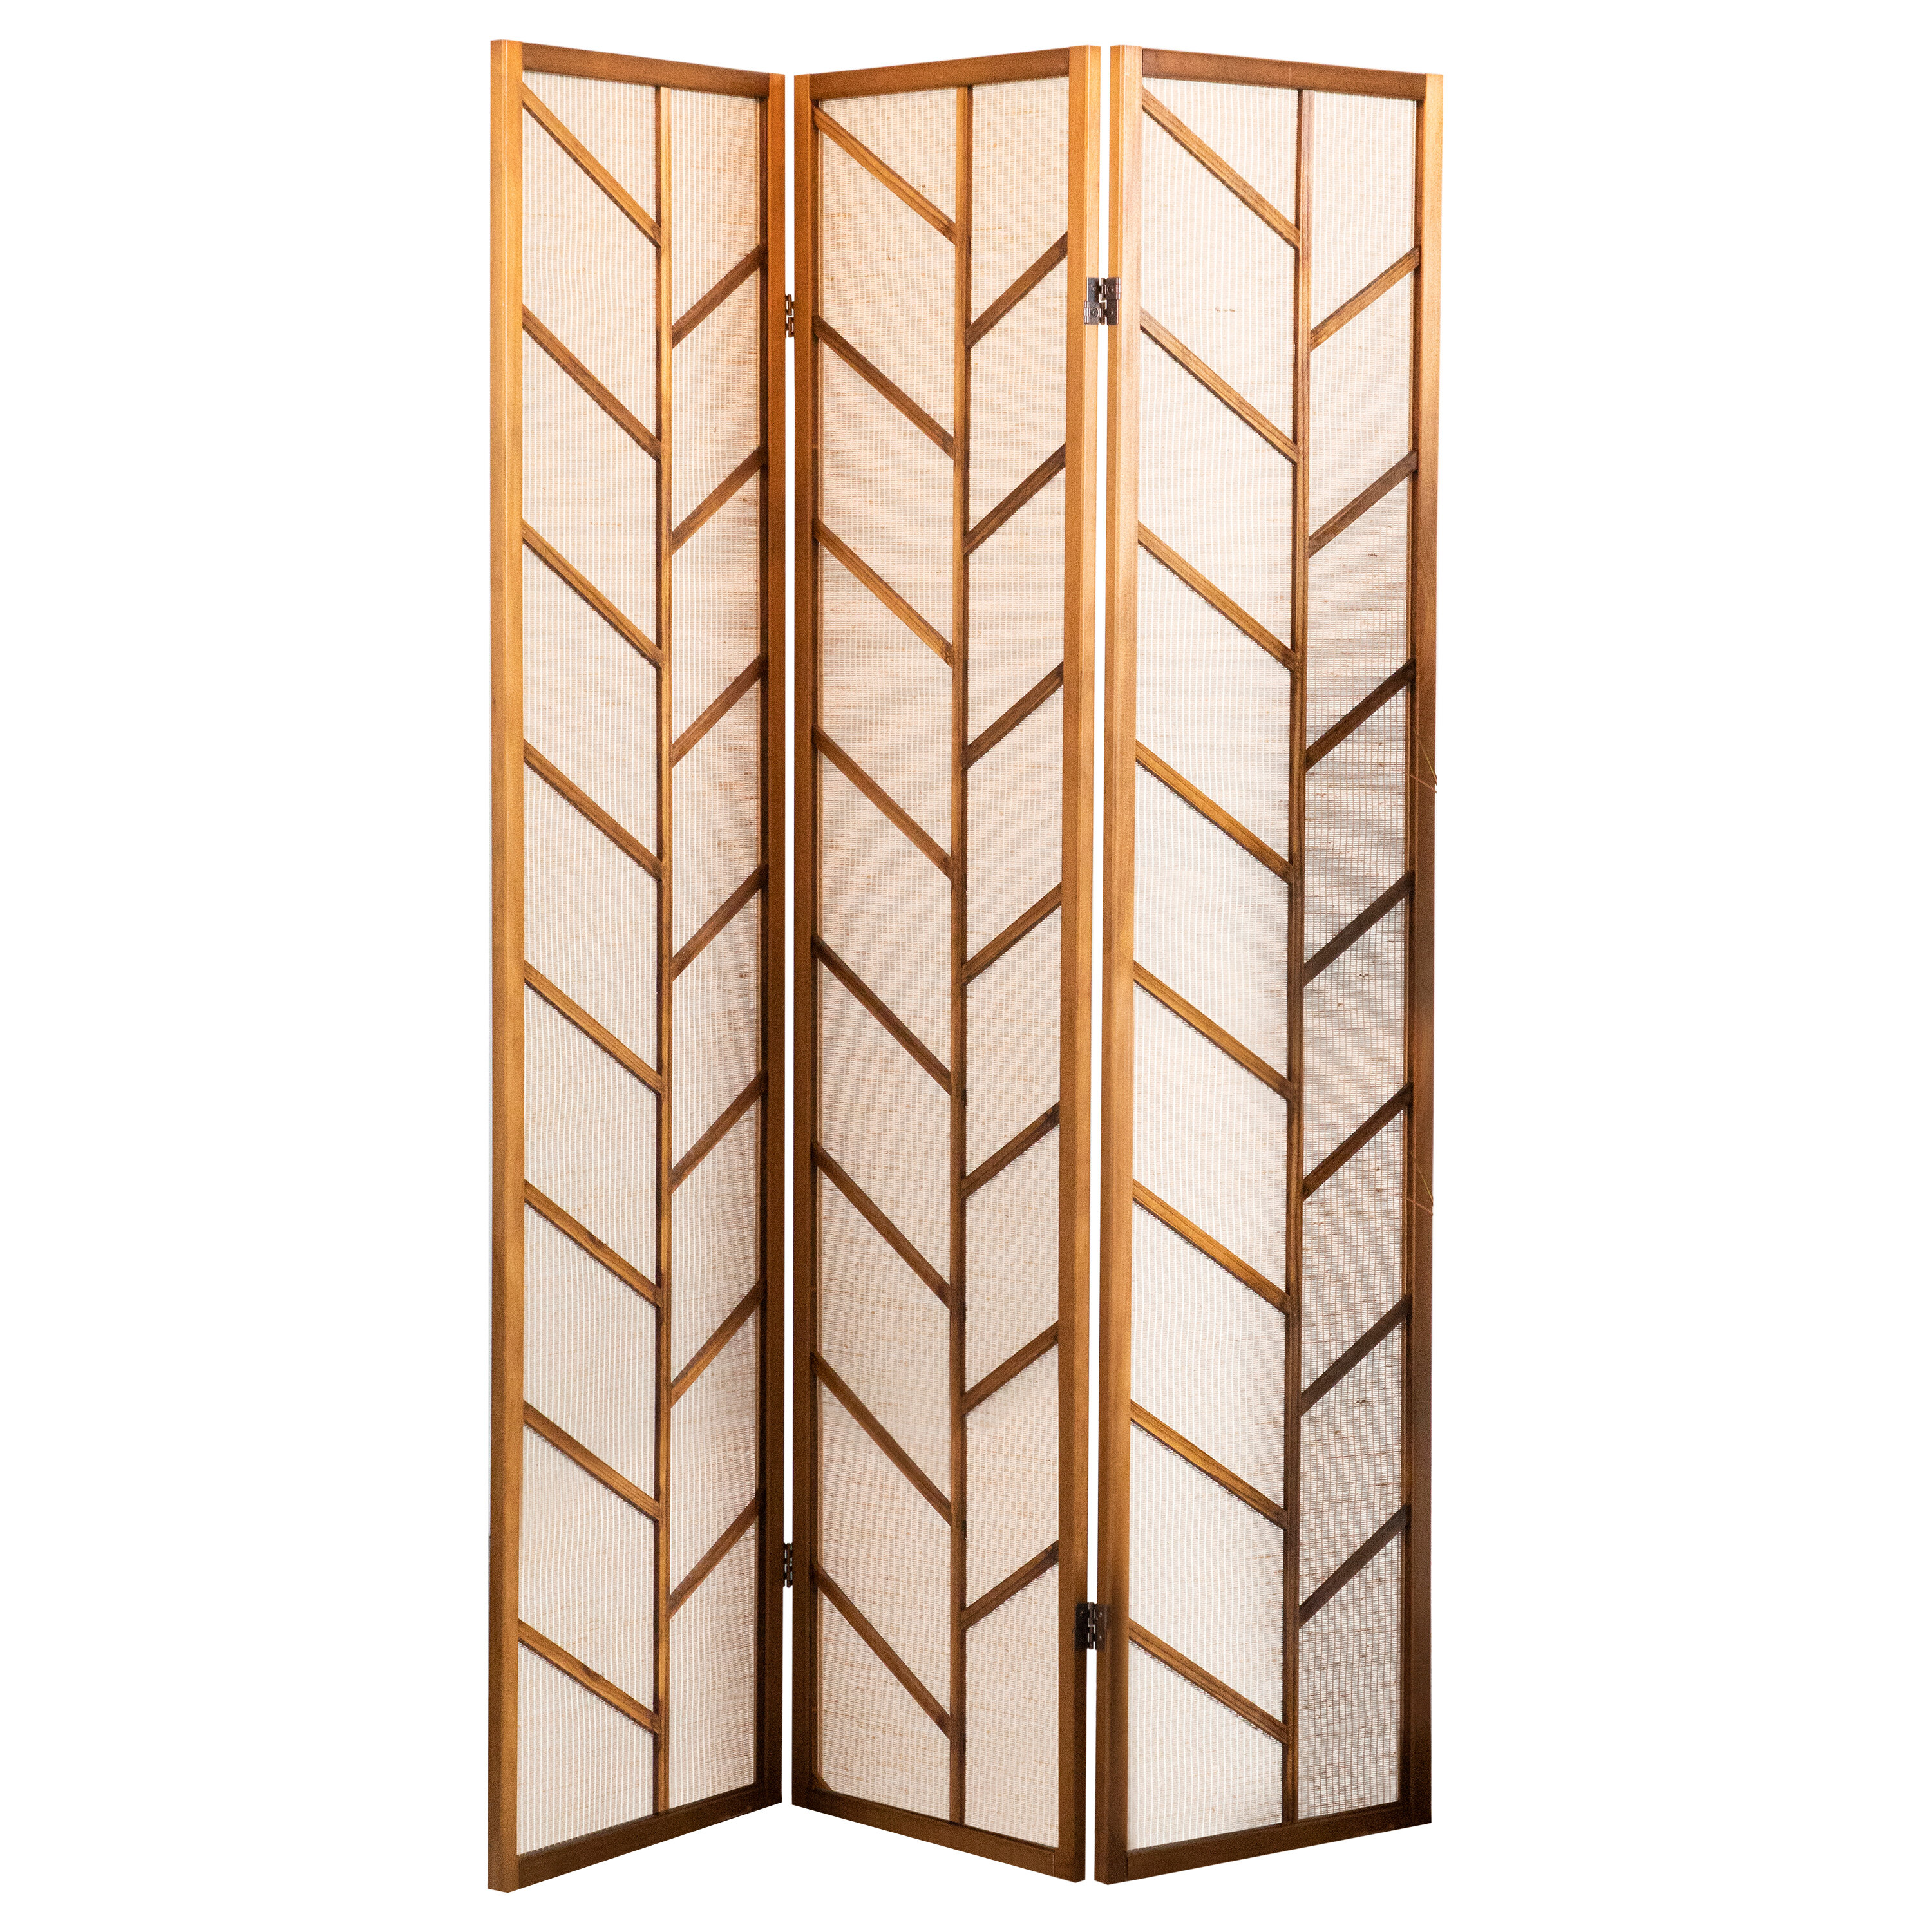 Mandloi 52'' W x 70.25'' H 3 - Panel Solid Wood Folding Room Divider